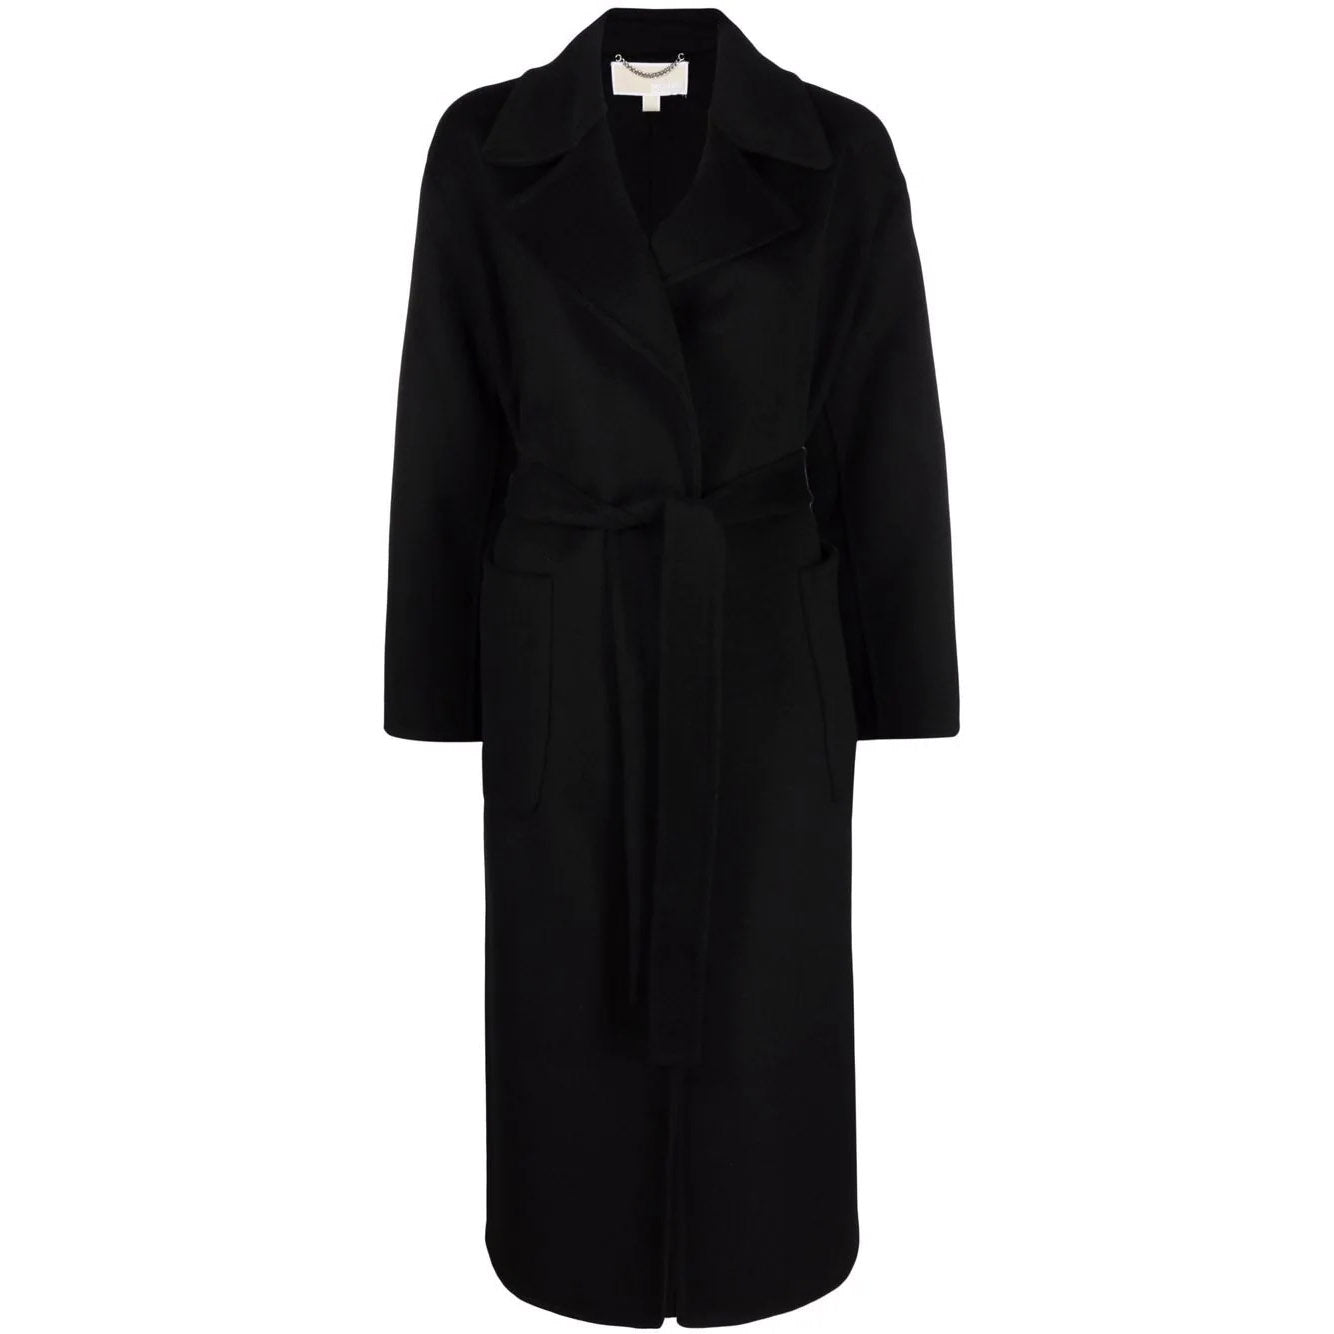 MICHAEL KORS moteriškas juodas paltas Doubleface robe coat